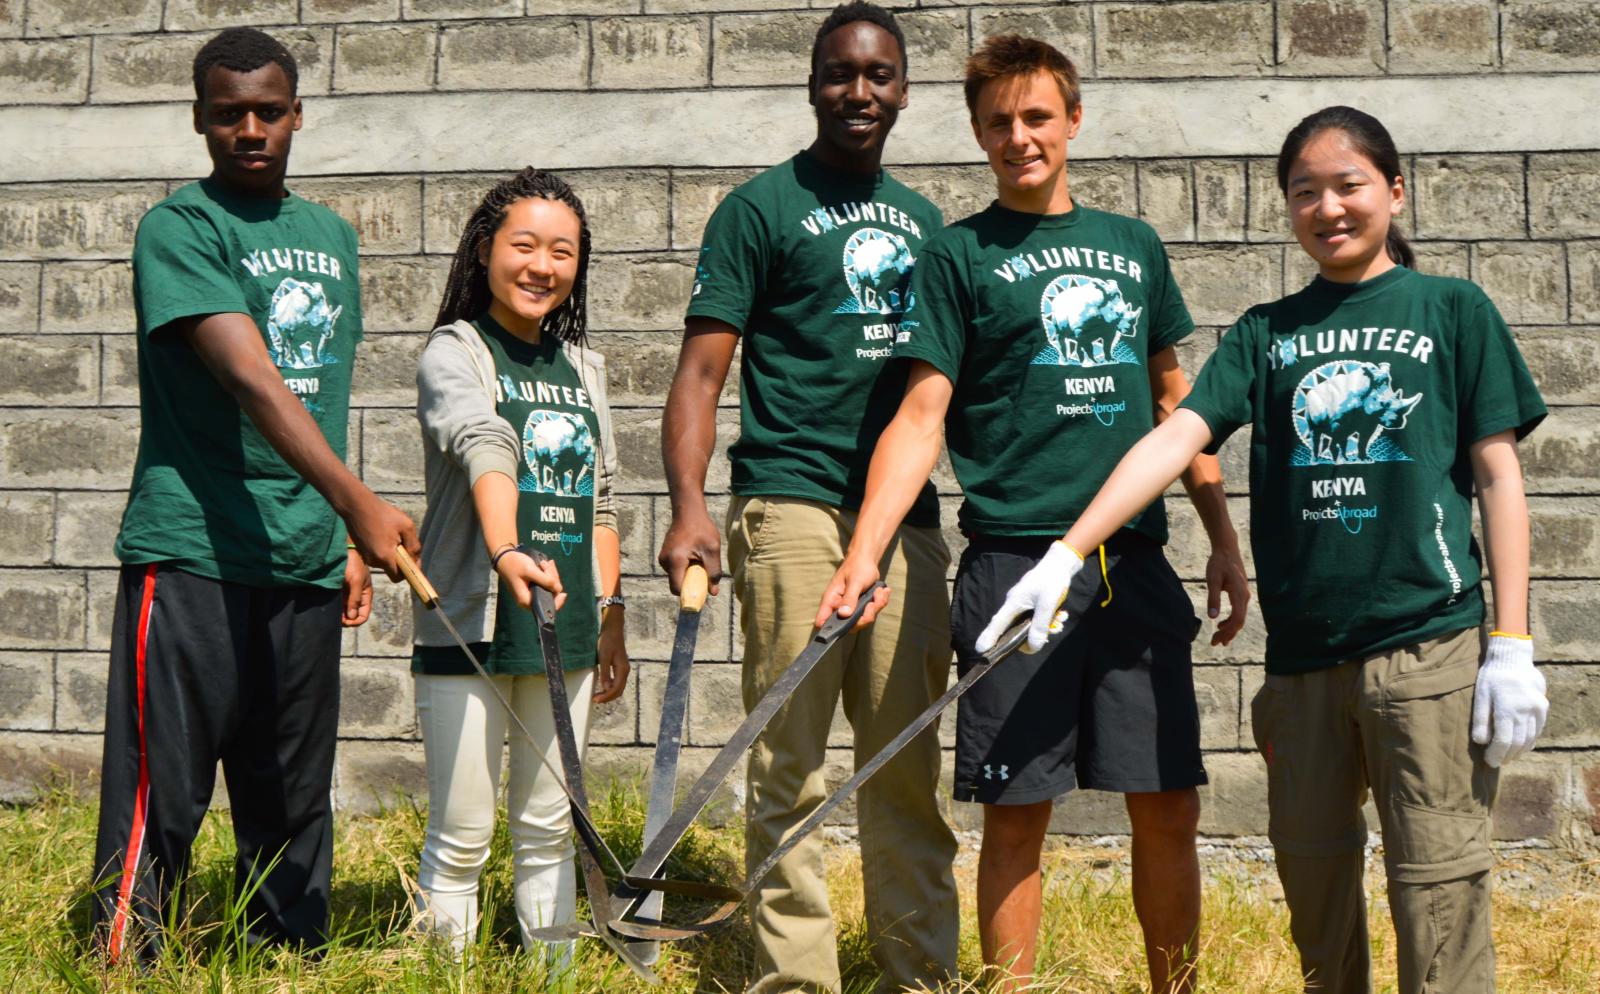 Conservation volunteers in Kenya join together on a high school special volunteer trip.